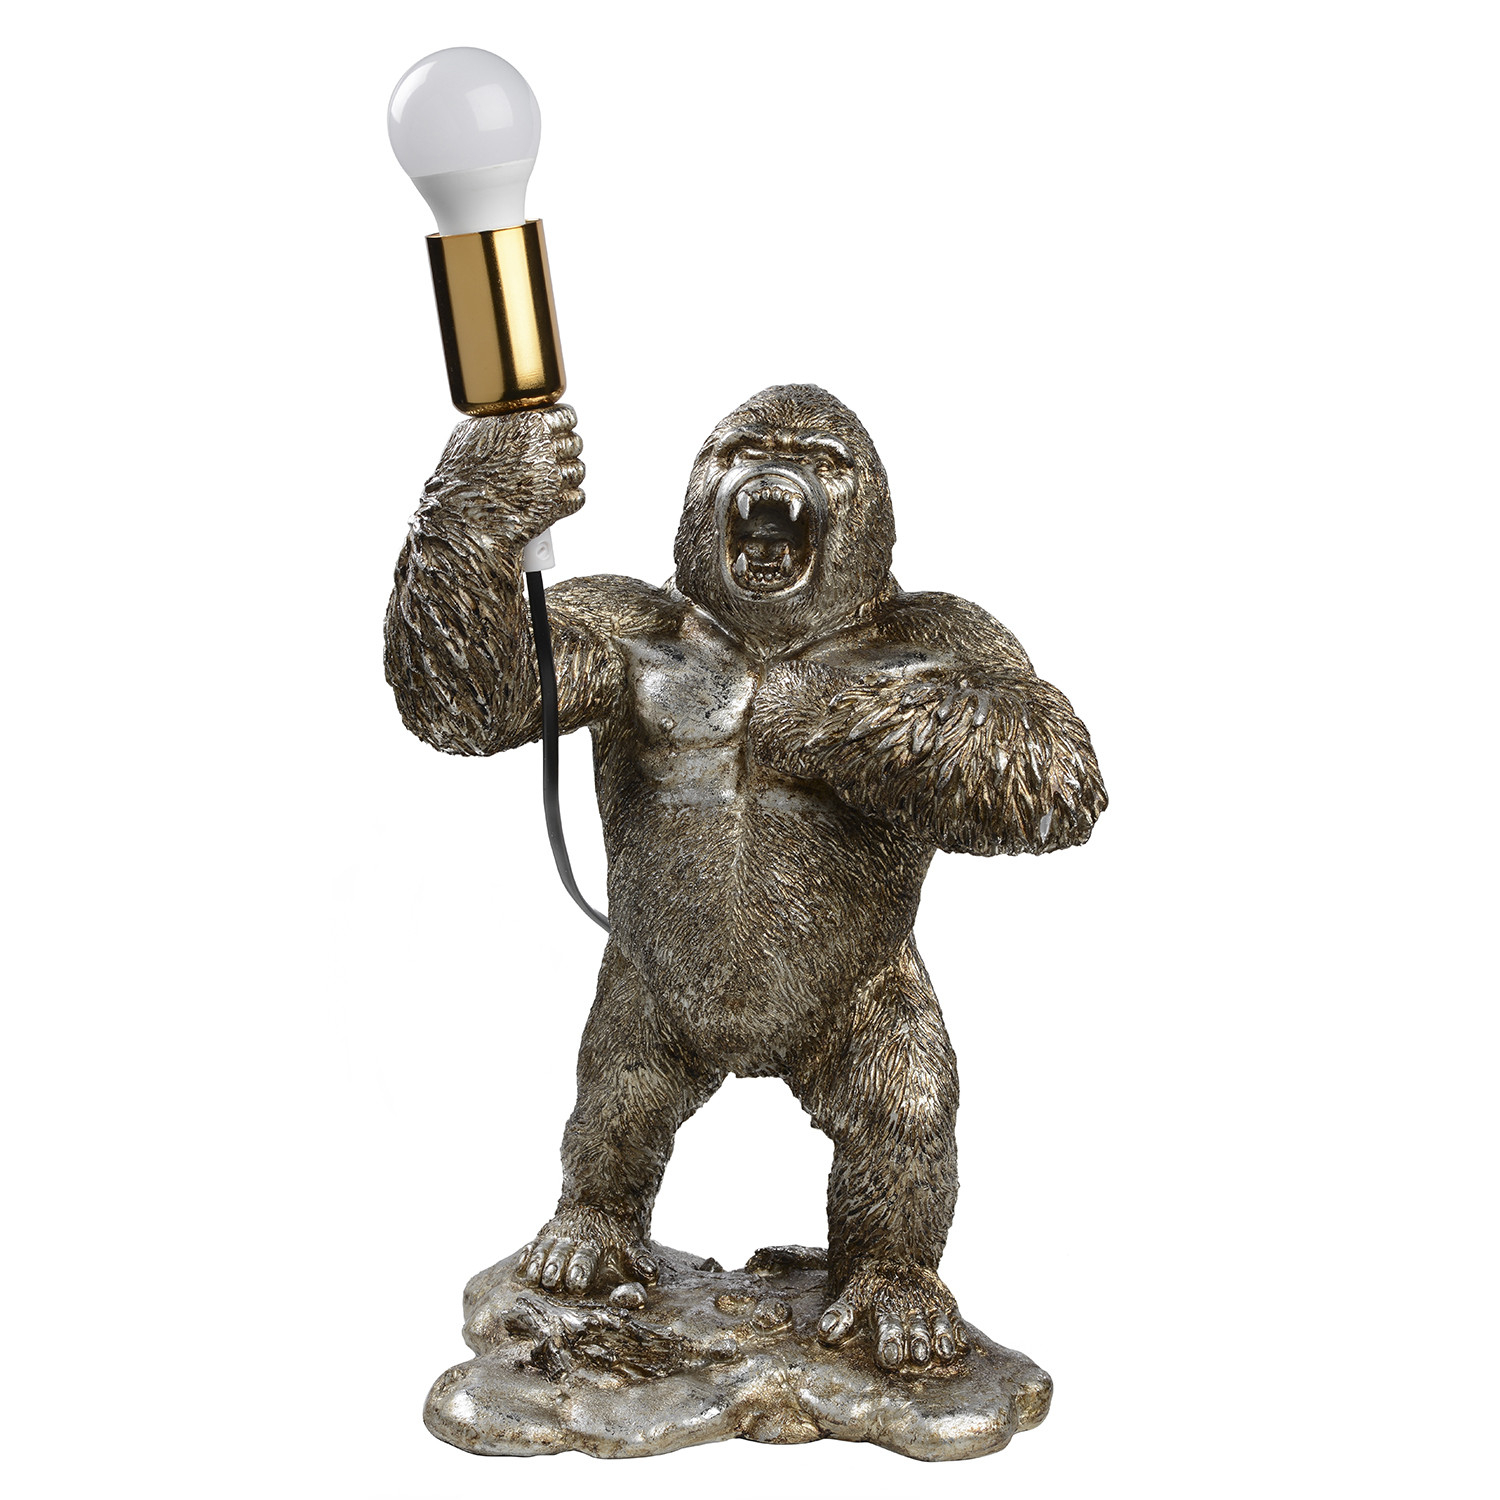 abigail ahern gorilla lamp